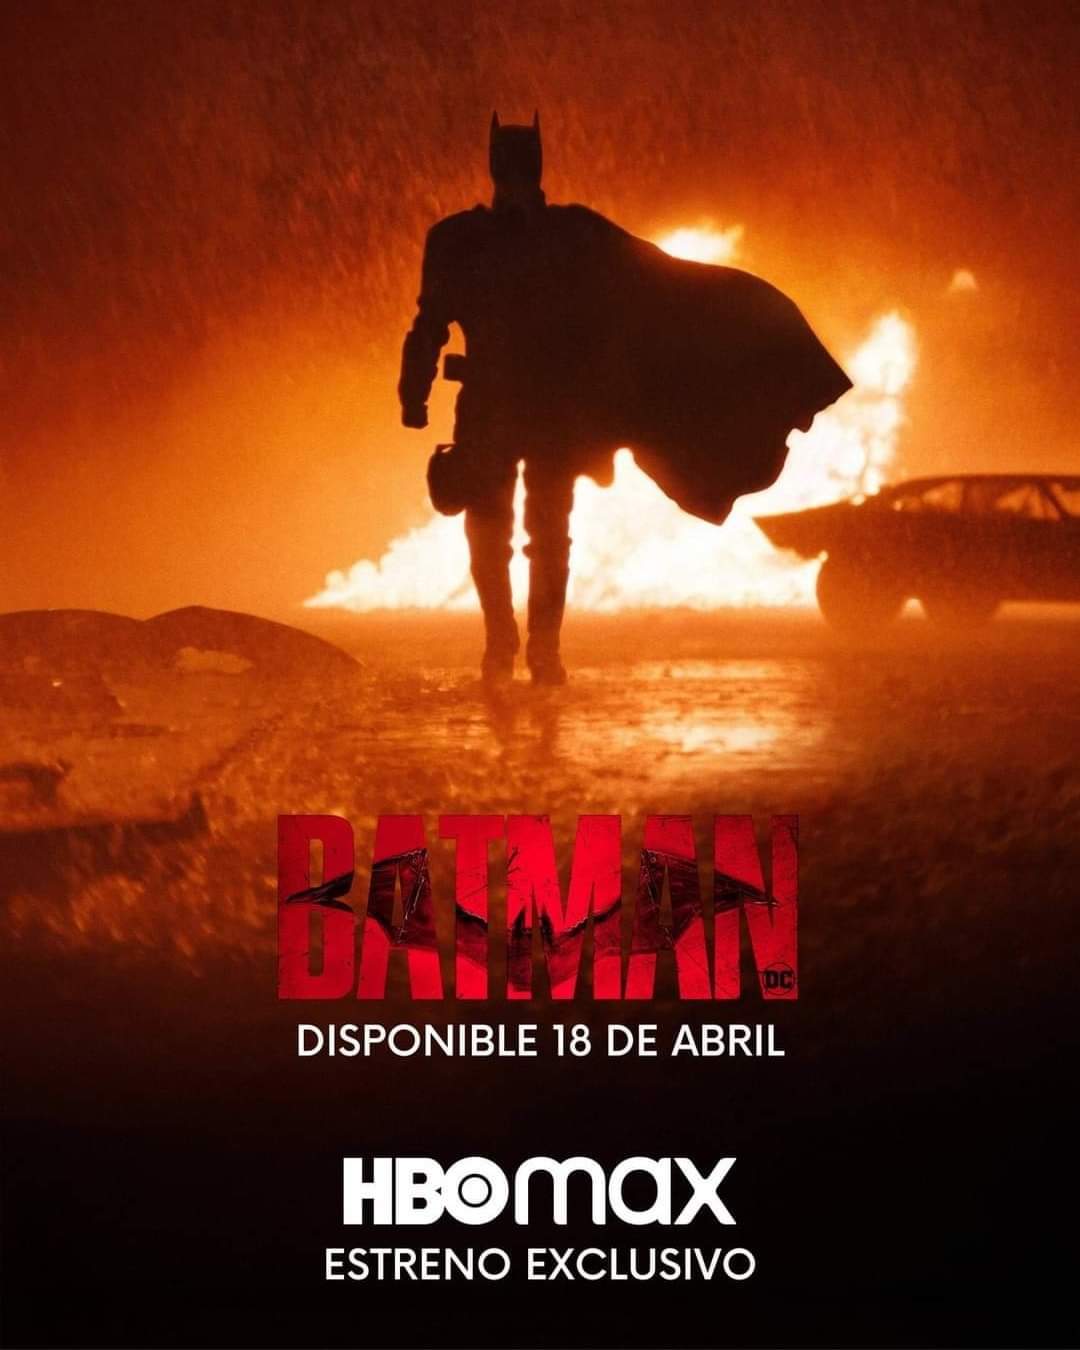 The Batman) llega a HBO Max este próximo lunes, 18 de abril